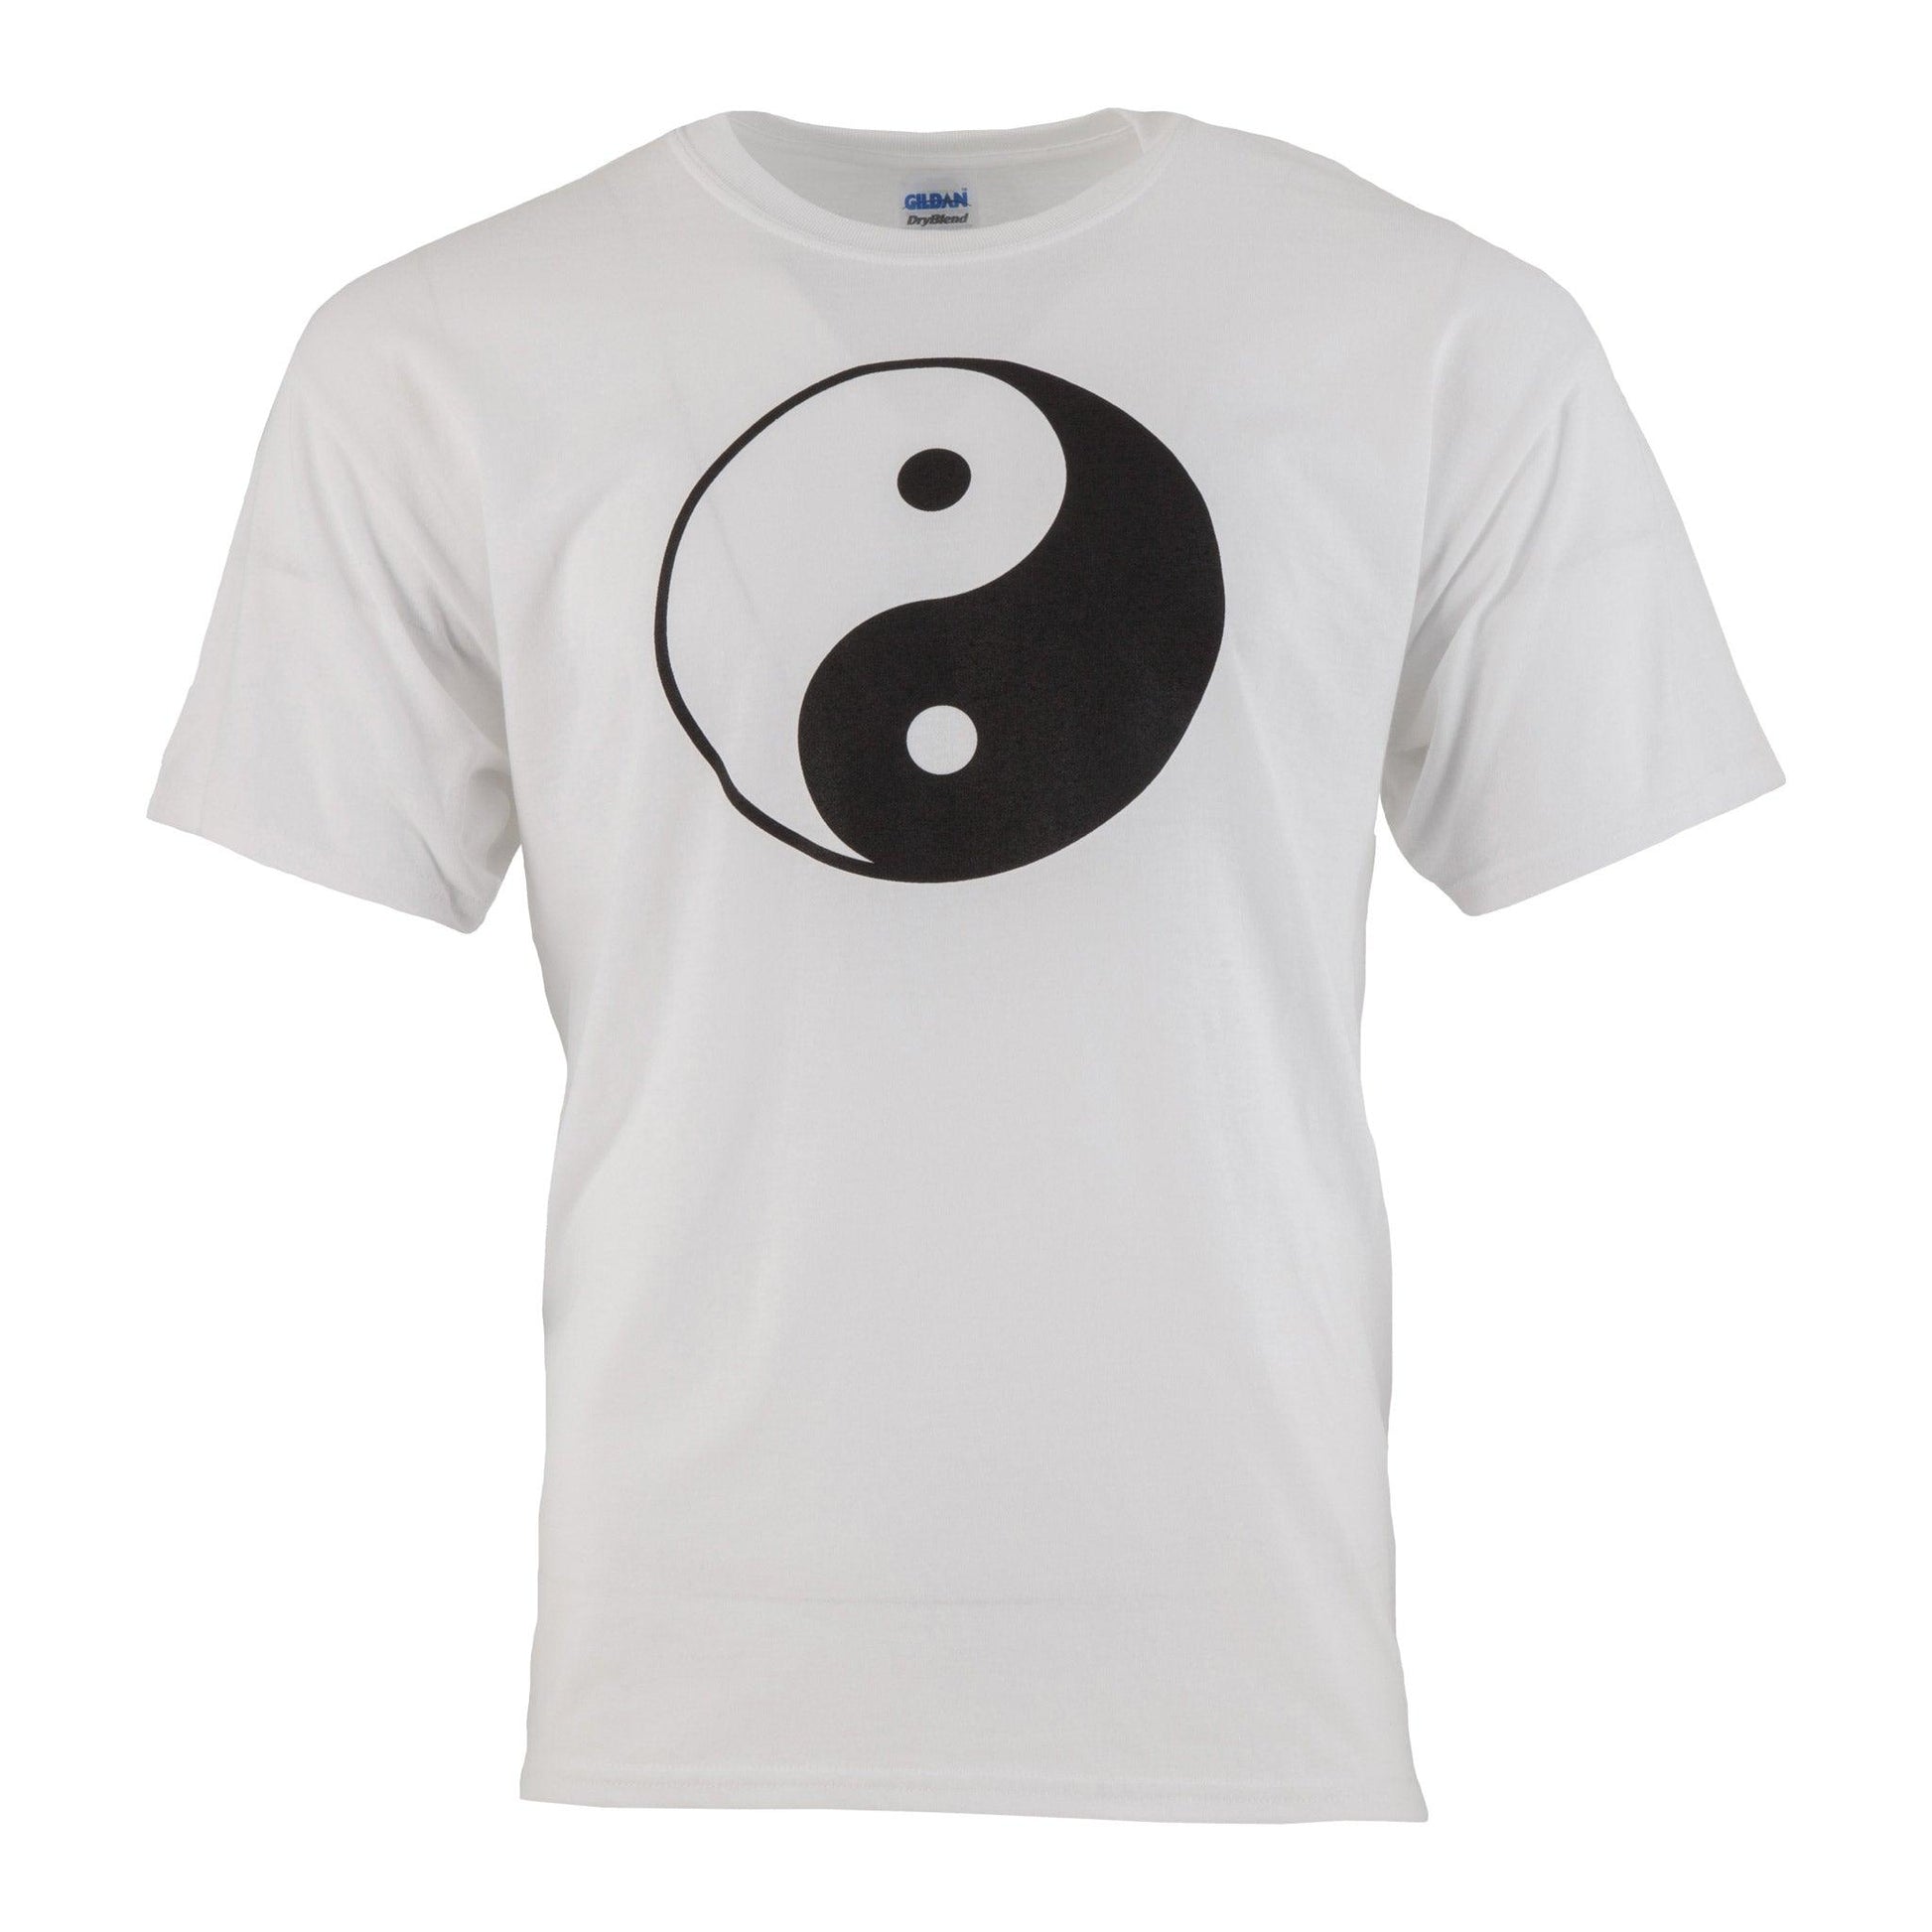 Yin & Yang T-Shirt - Violent Art Shop